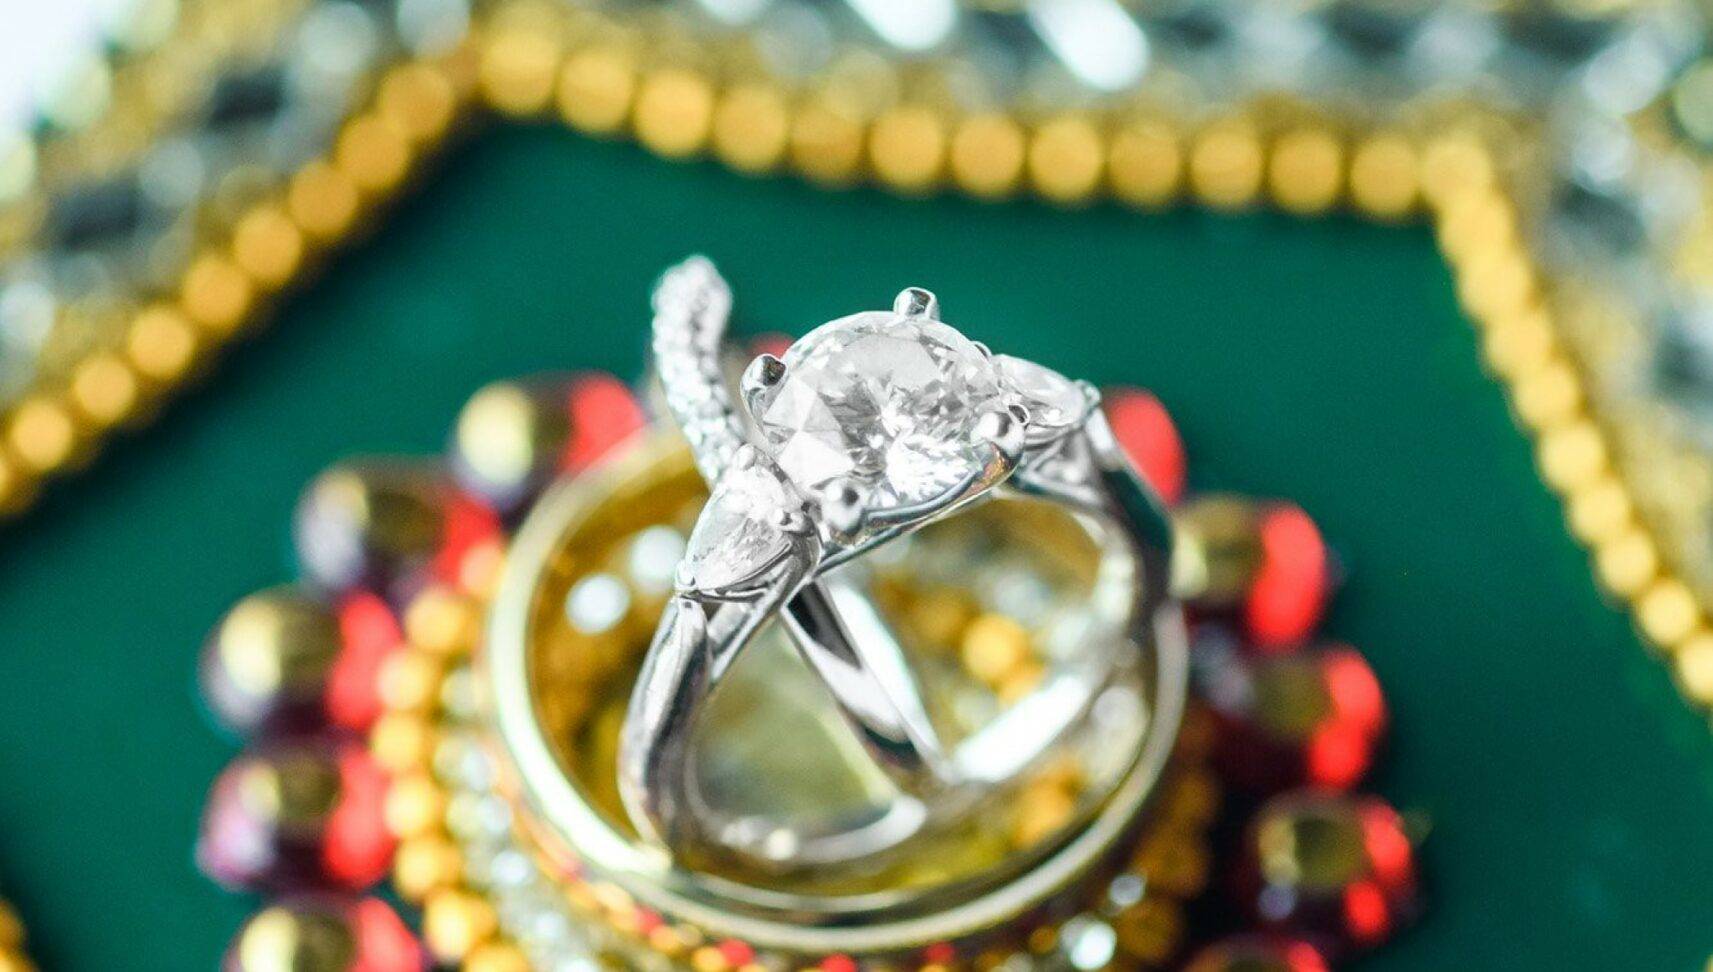 wedding ring on Indian wedding decor